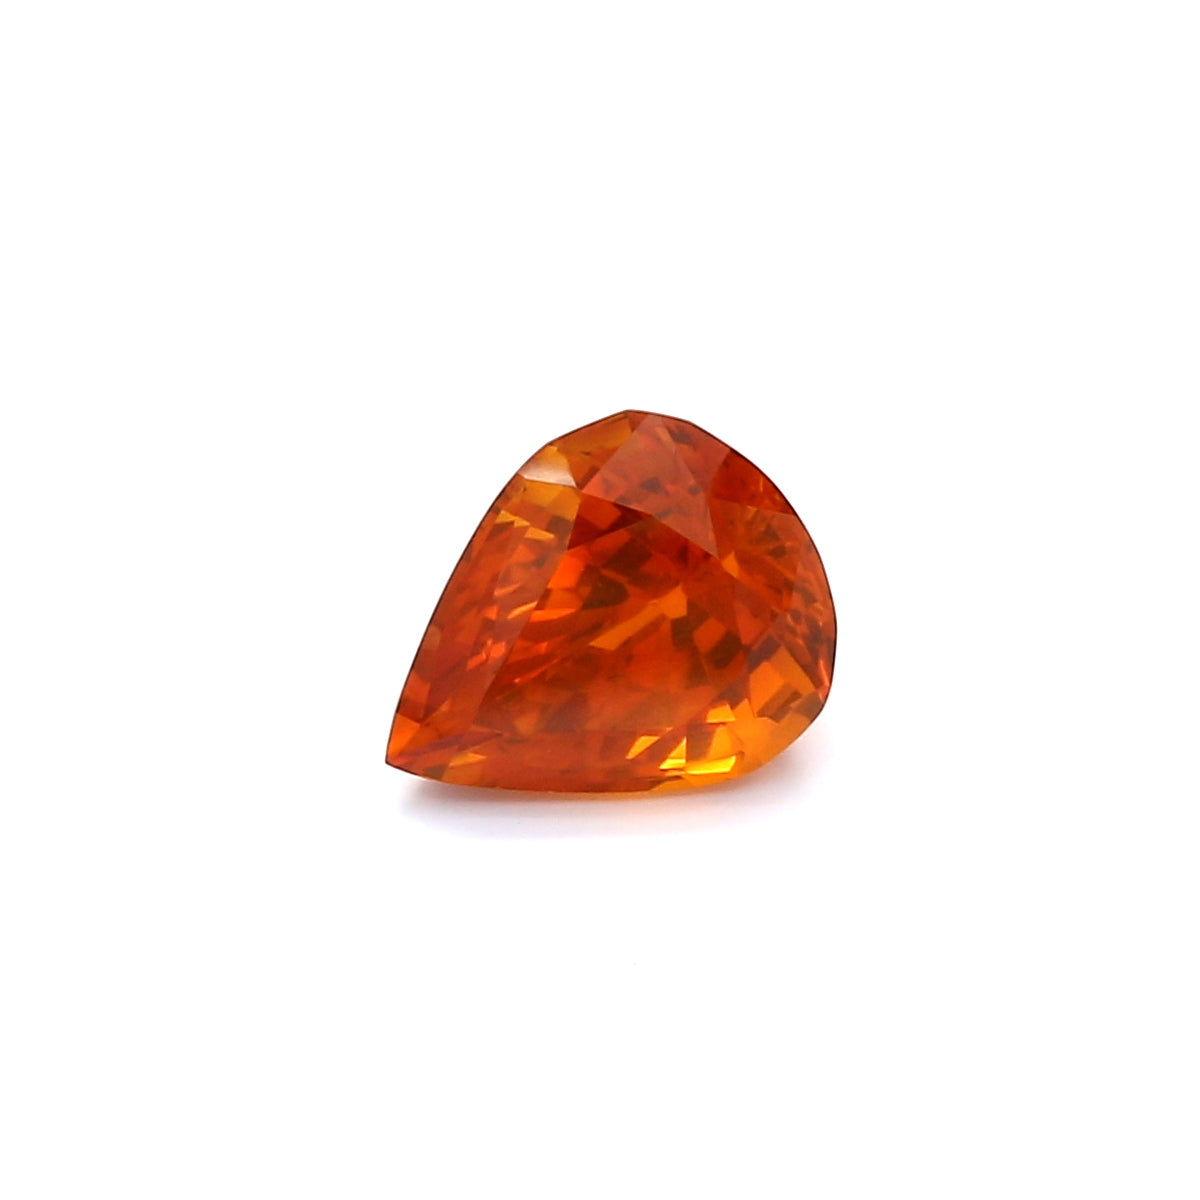 1.96ct Orange, Pear Shape Sapphire, Heated, Sri Lanka - 8.93 x 6.98 x 5.05mm